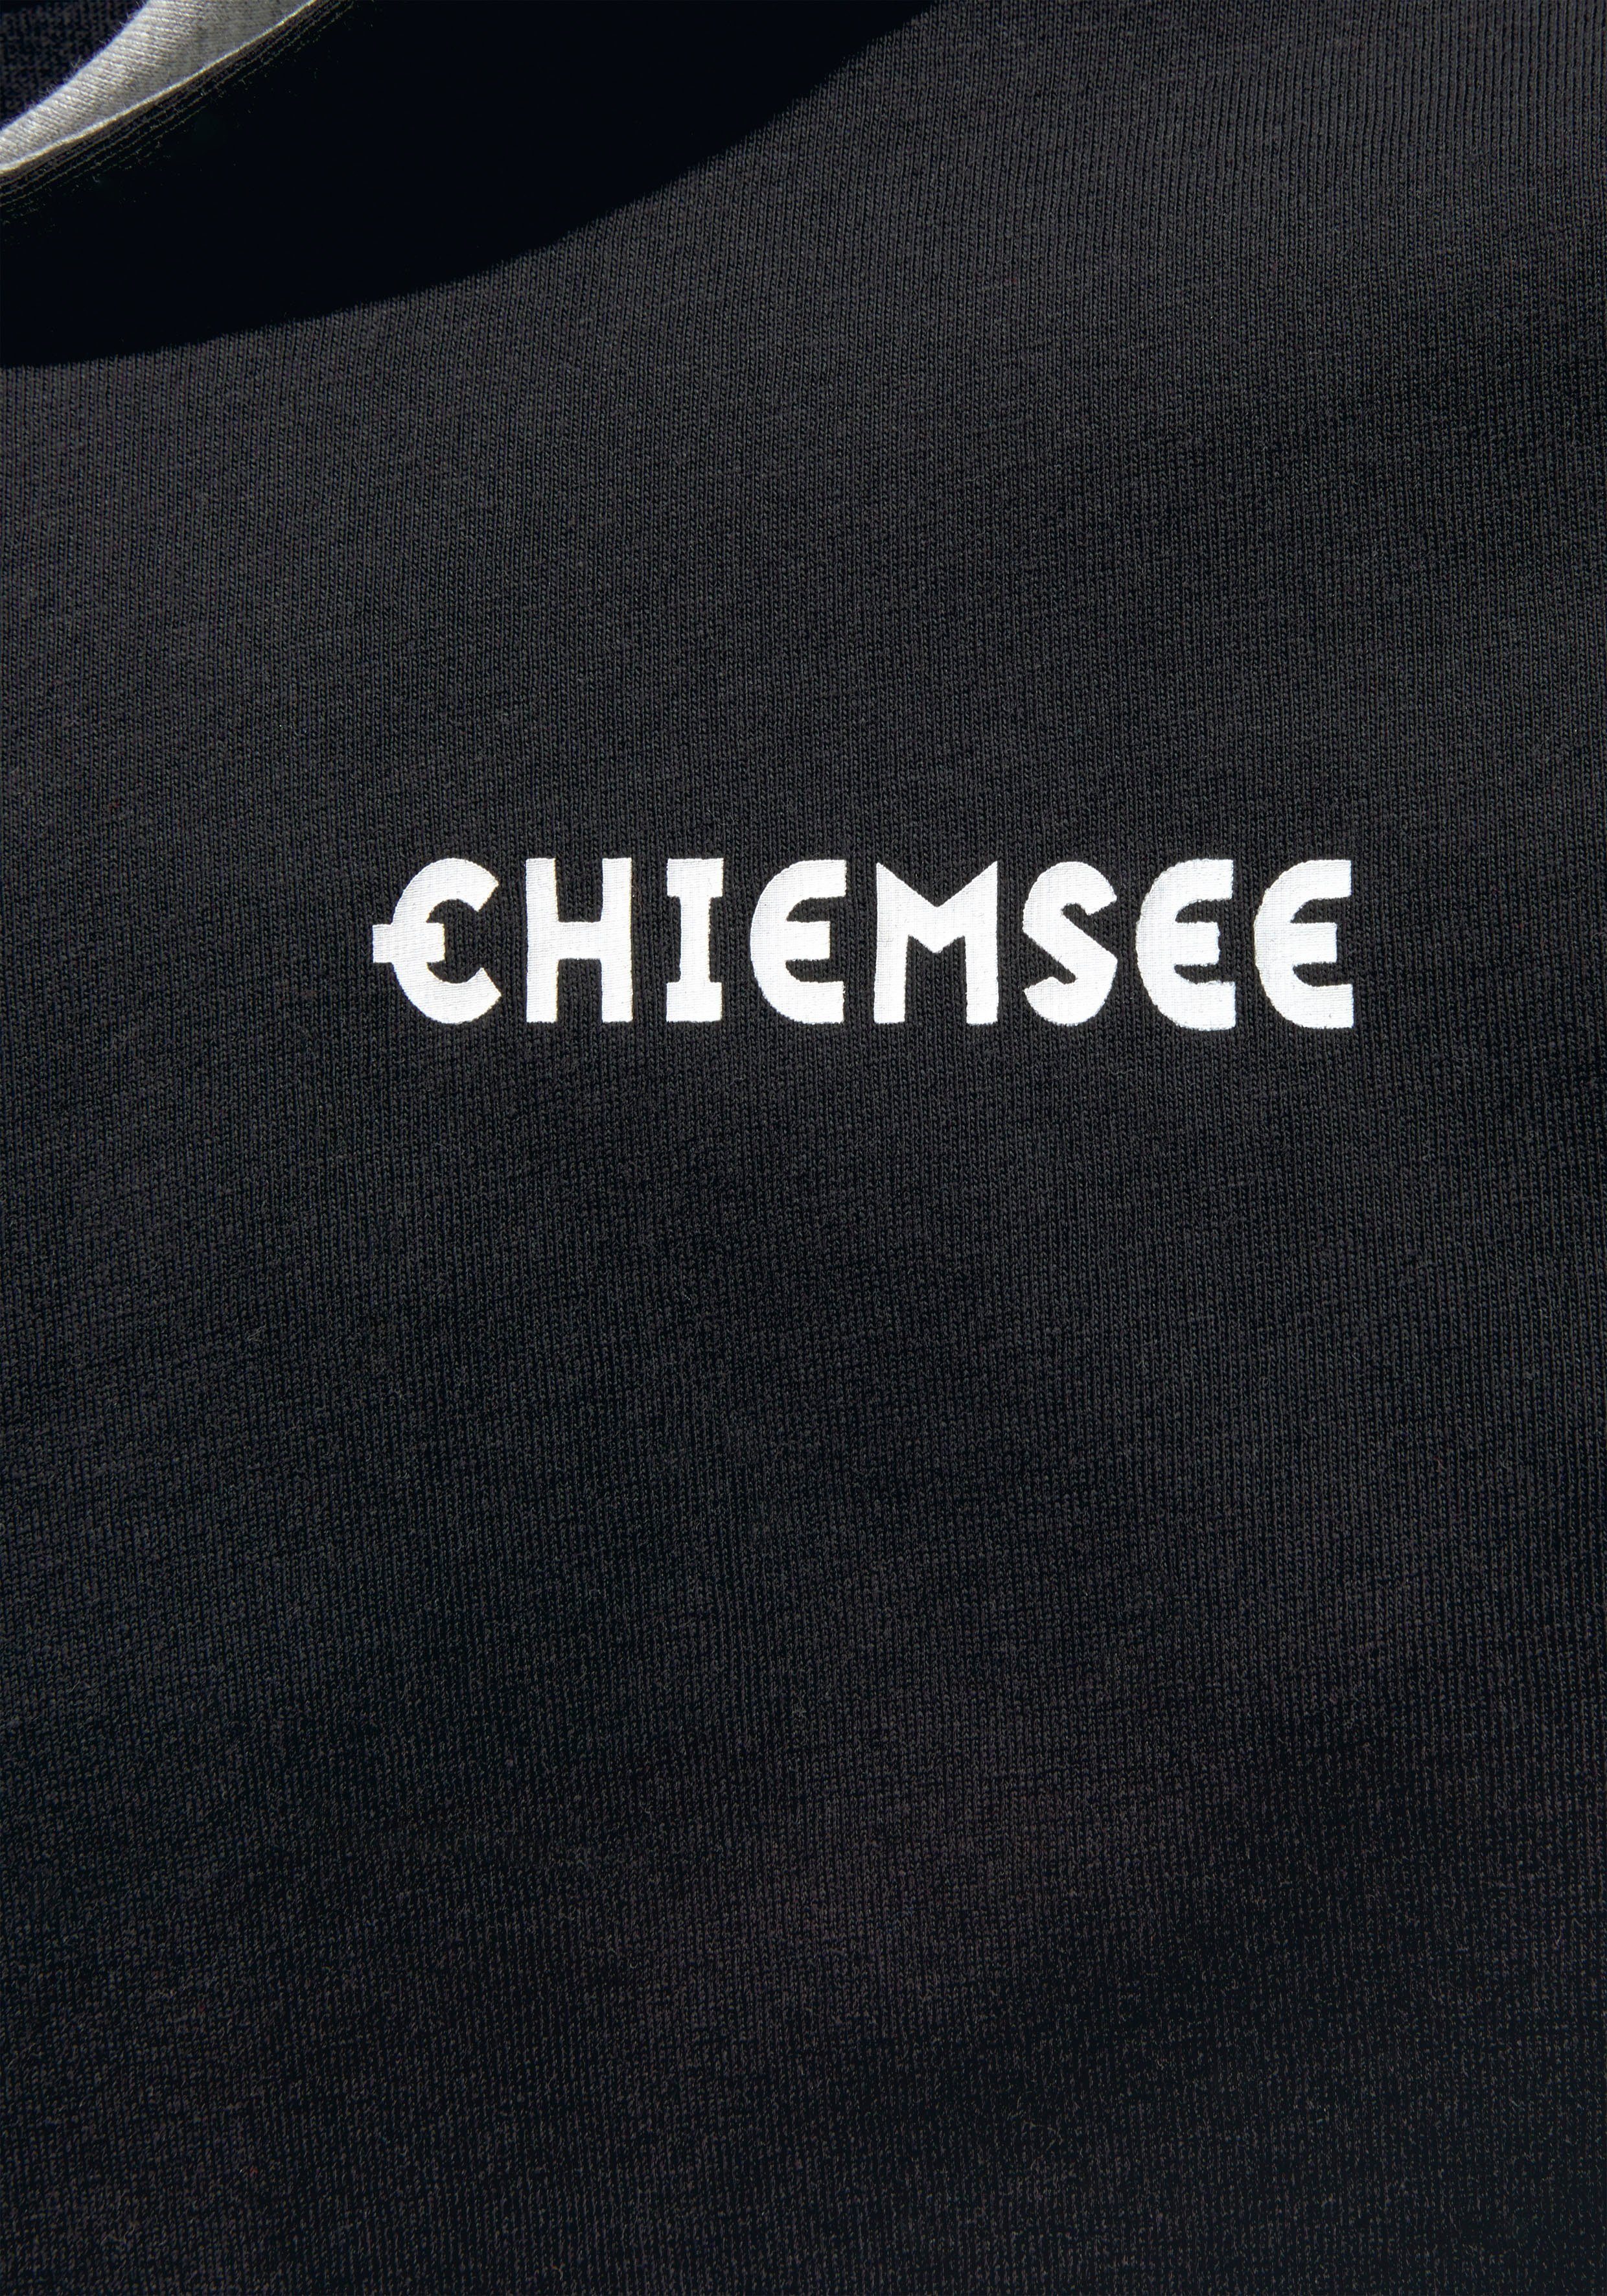 und Chiemsee Kapuzendruck mit Kapuzenshirt Rückenprint